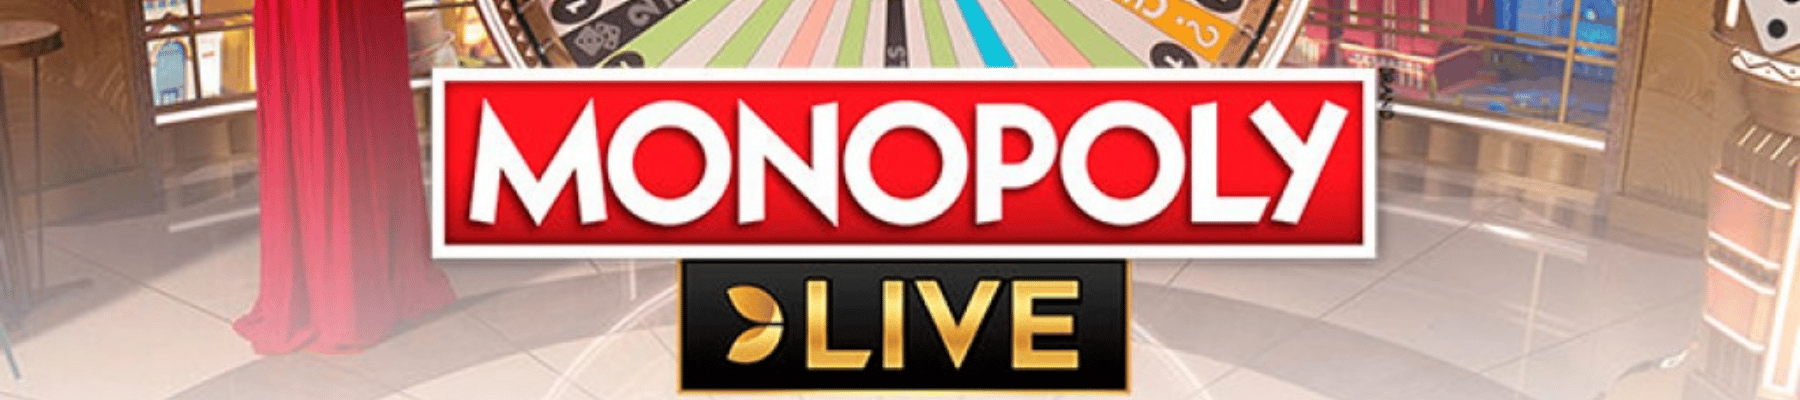 Monopoly Livebanner Img